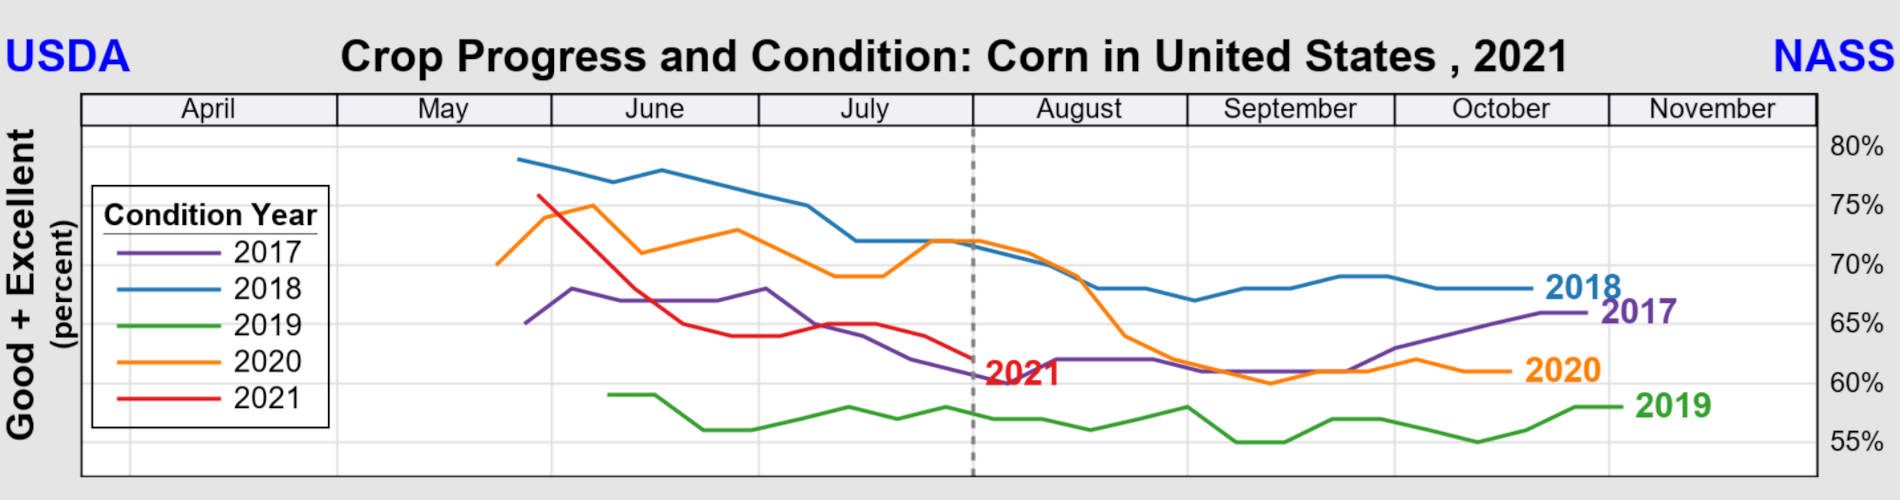 crop progress and condition corn header image 1900 500